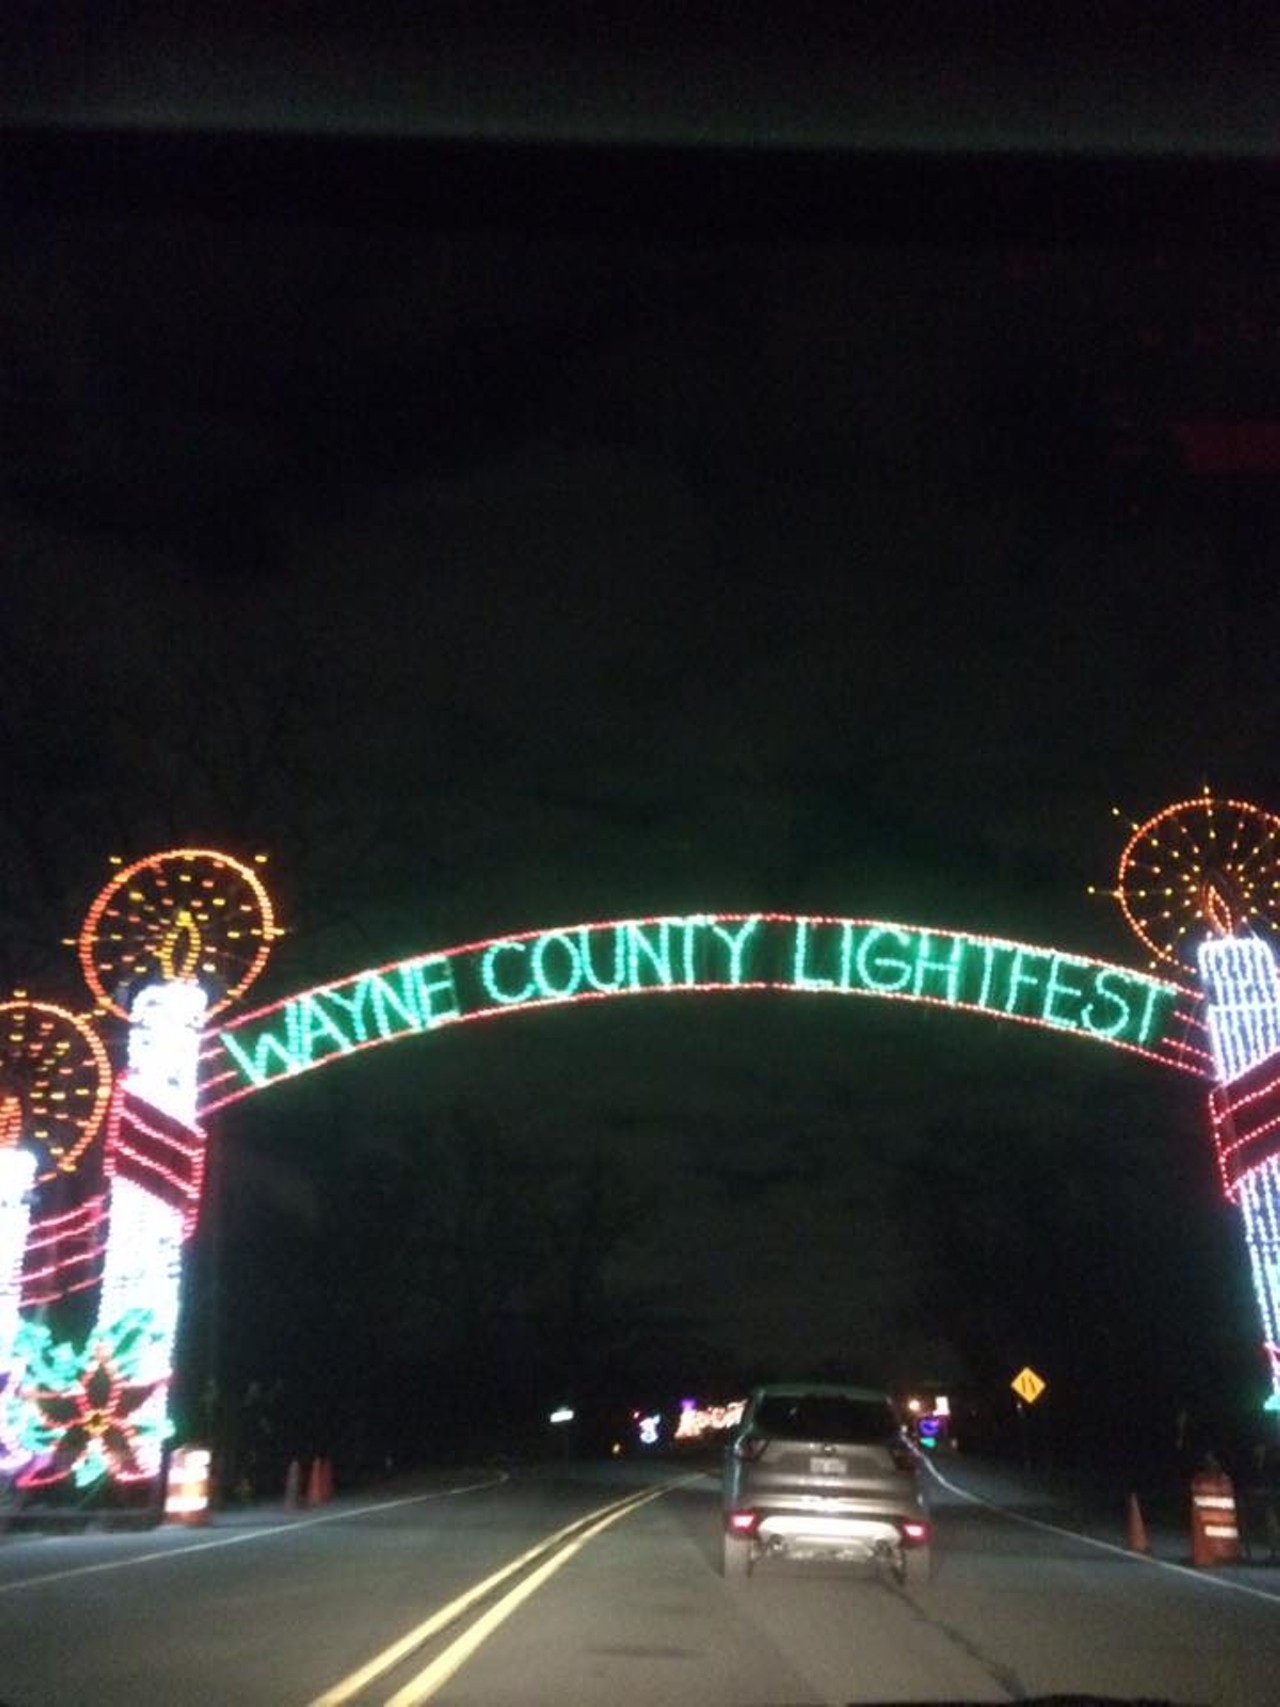 Wayne County Lightfest
Photo via Facebook